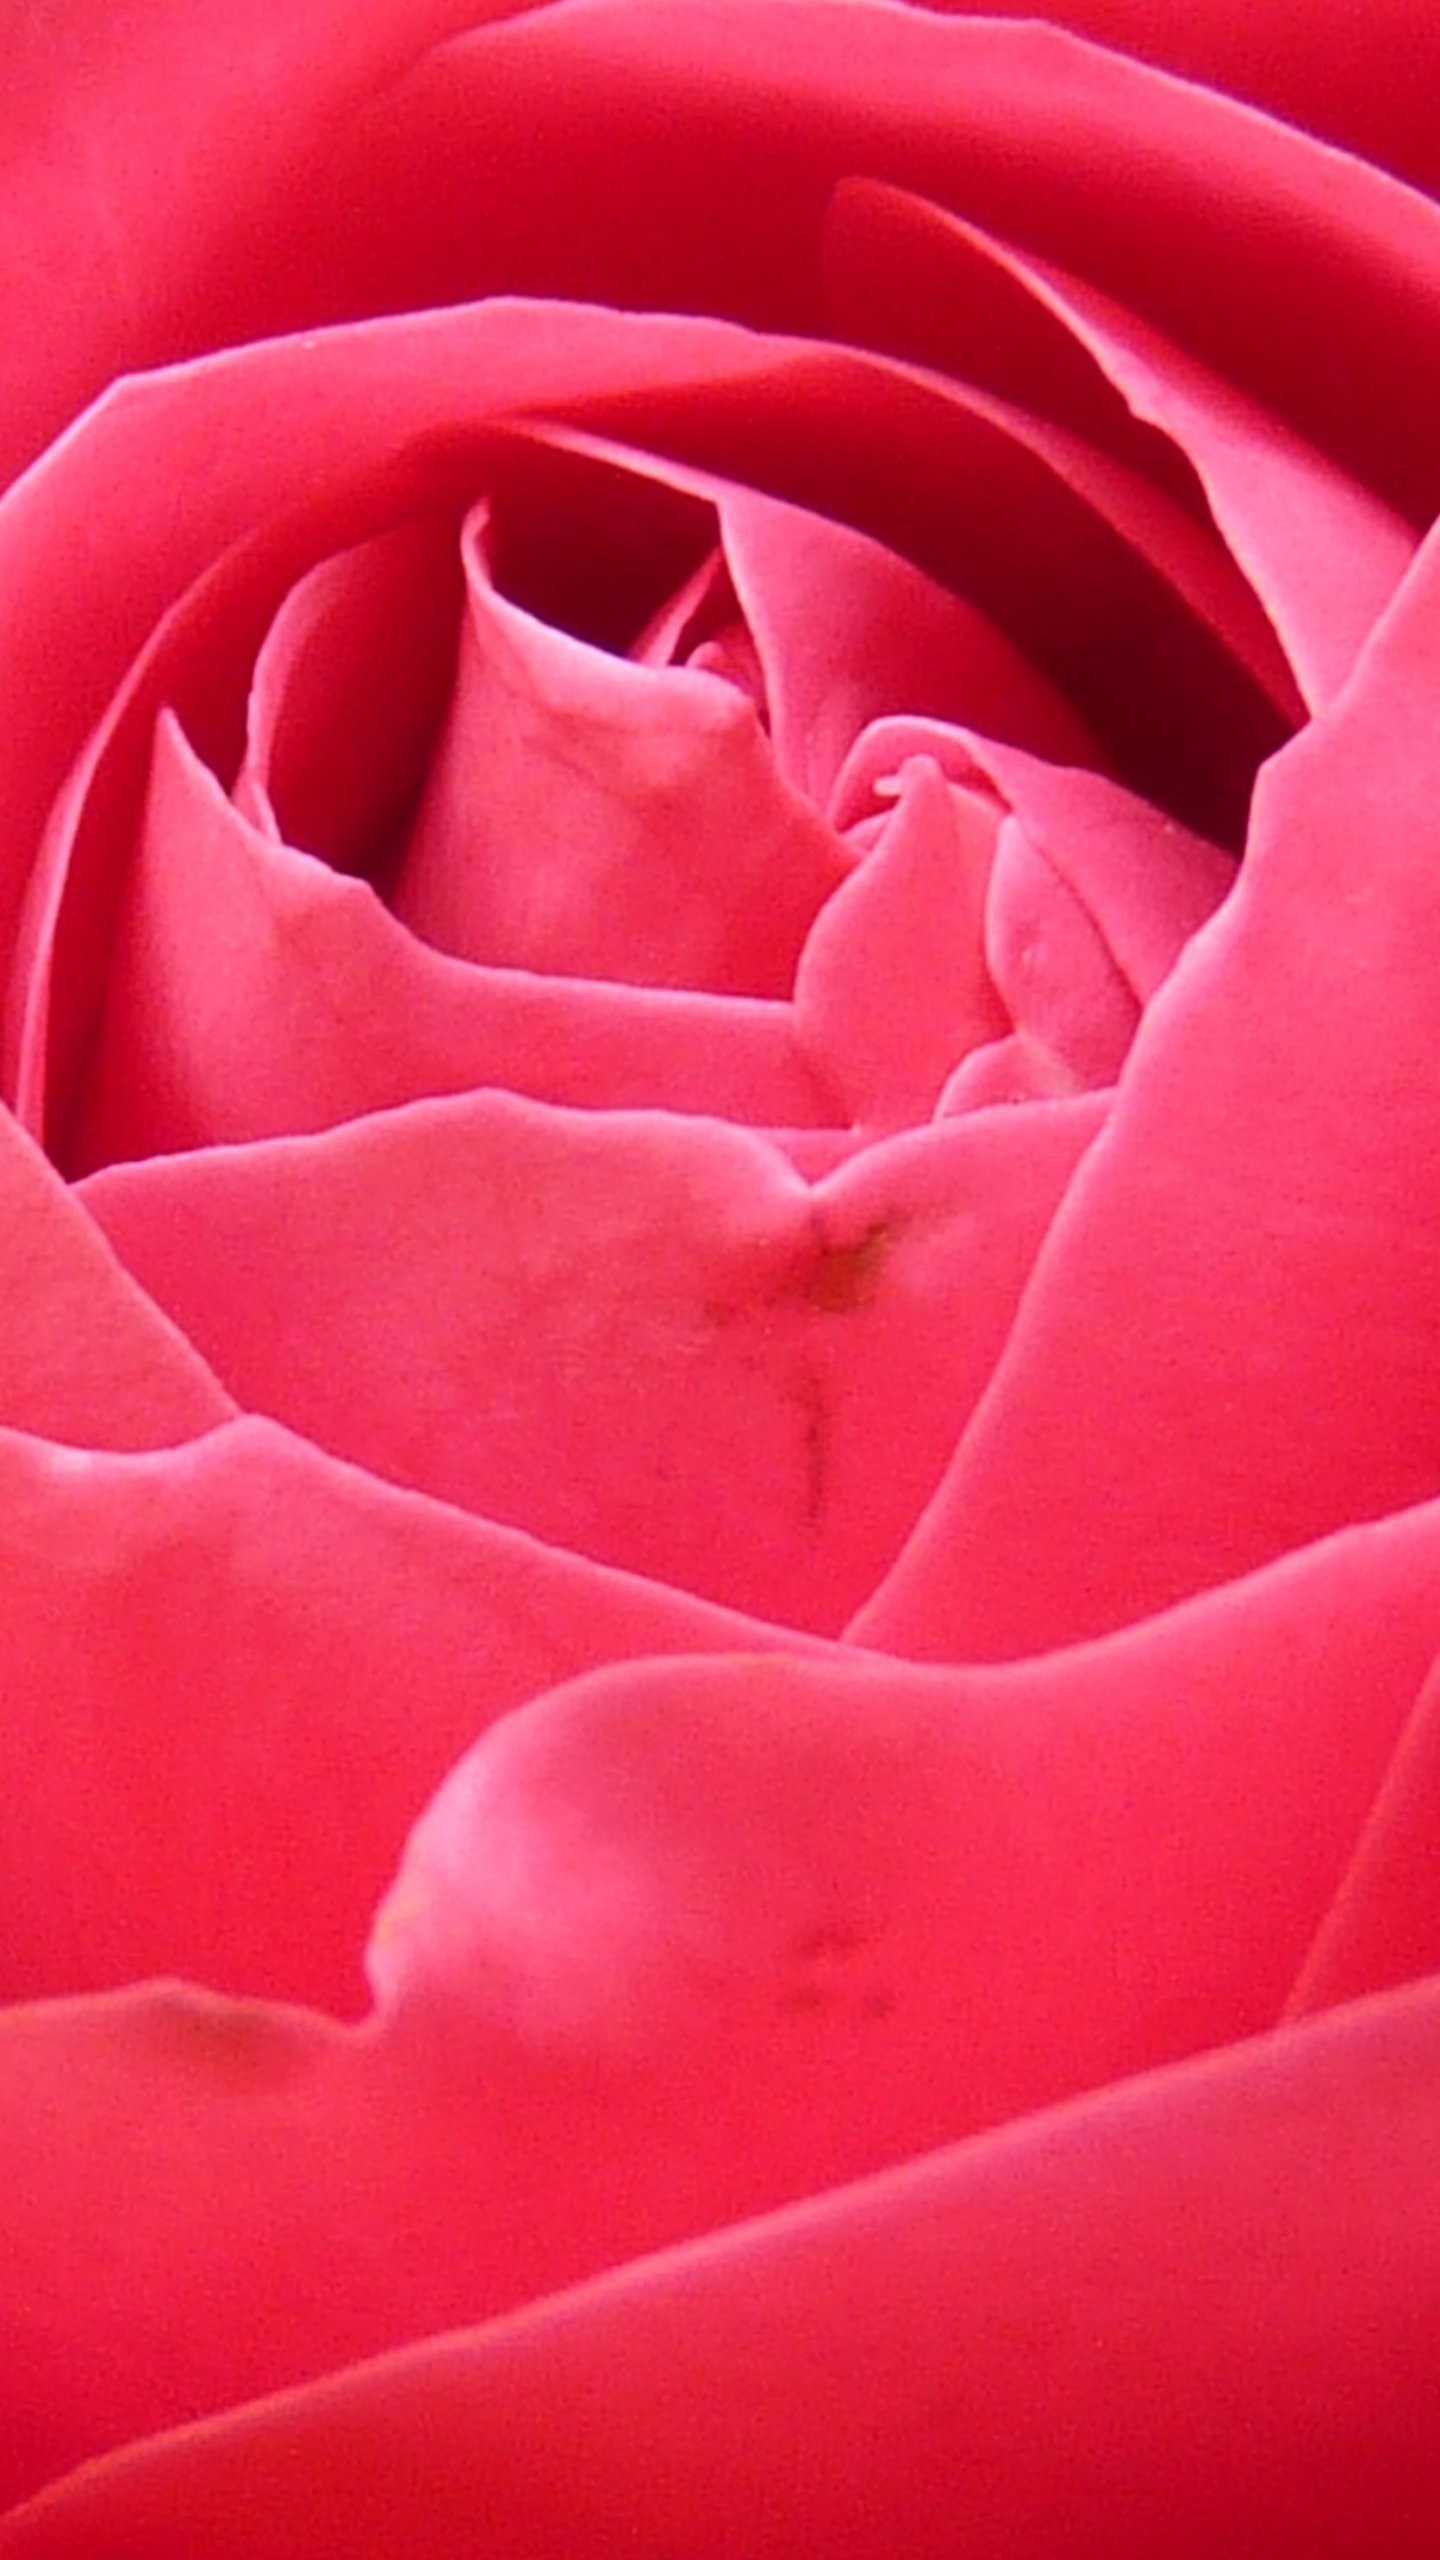 Bright Pink Rose Closeup Wallpaper - iPhone, Android & Desktop Backgrounds